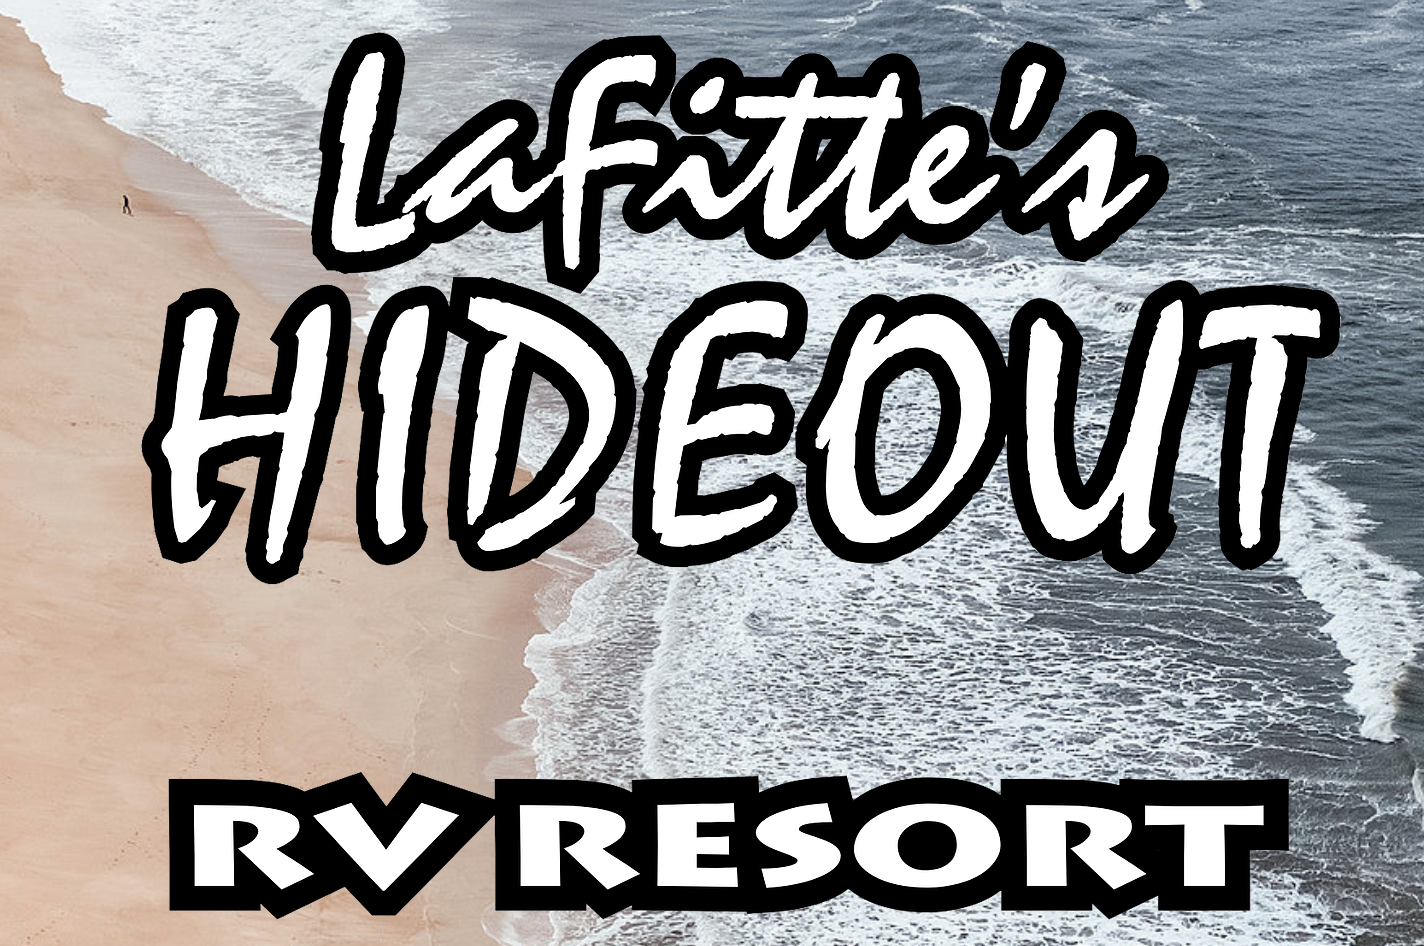 lafittes hideout rv resort port aransas texas gulf coast